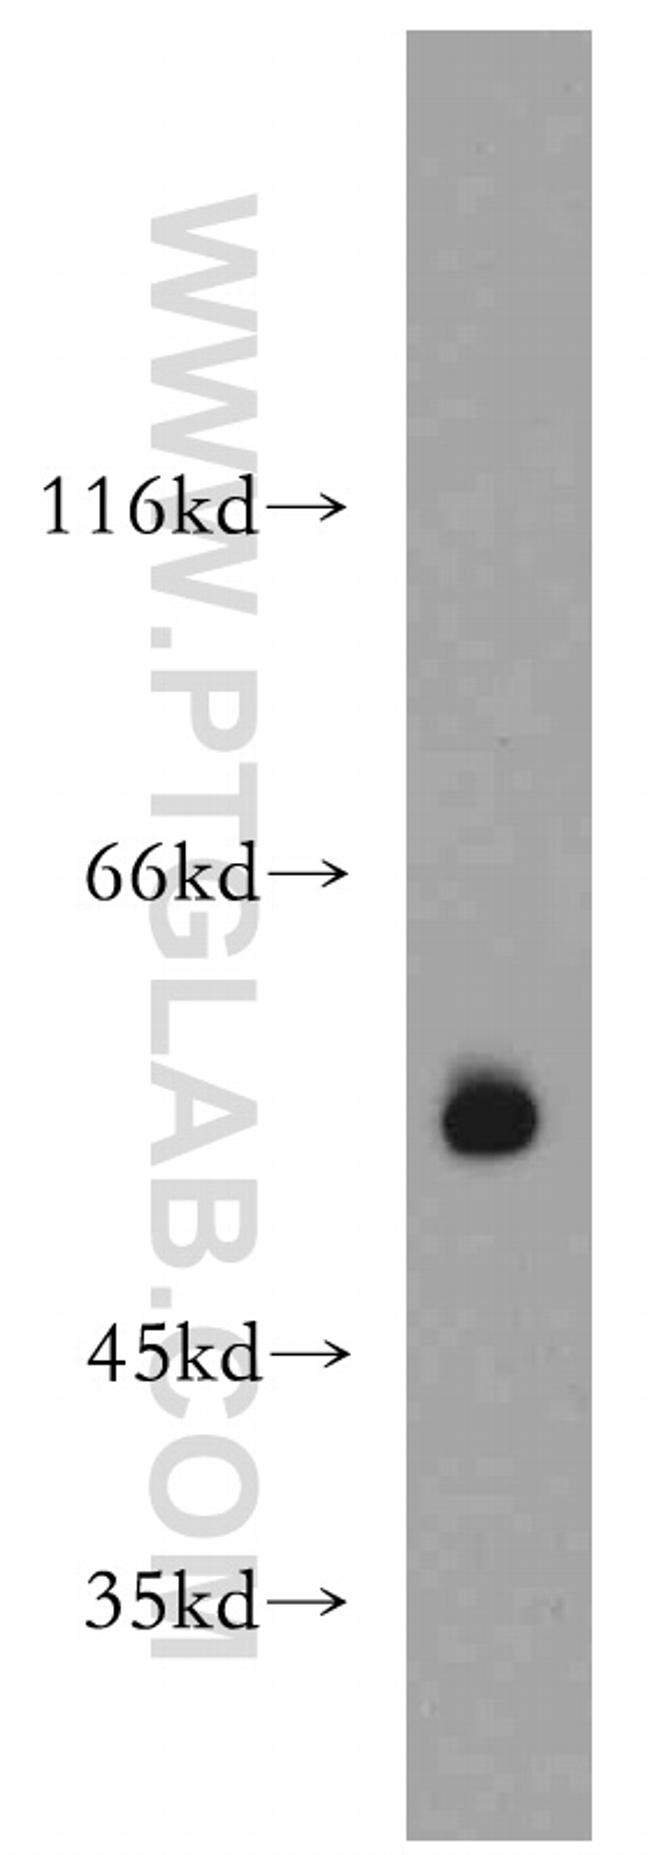 PRKACB Antibody in Western Blot (WB)